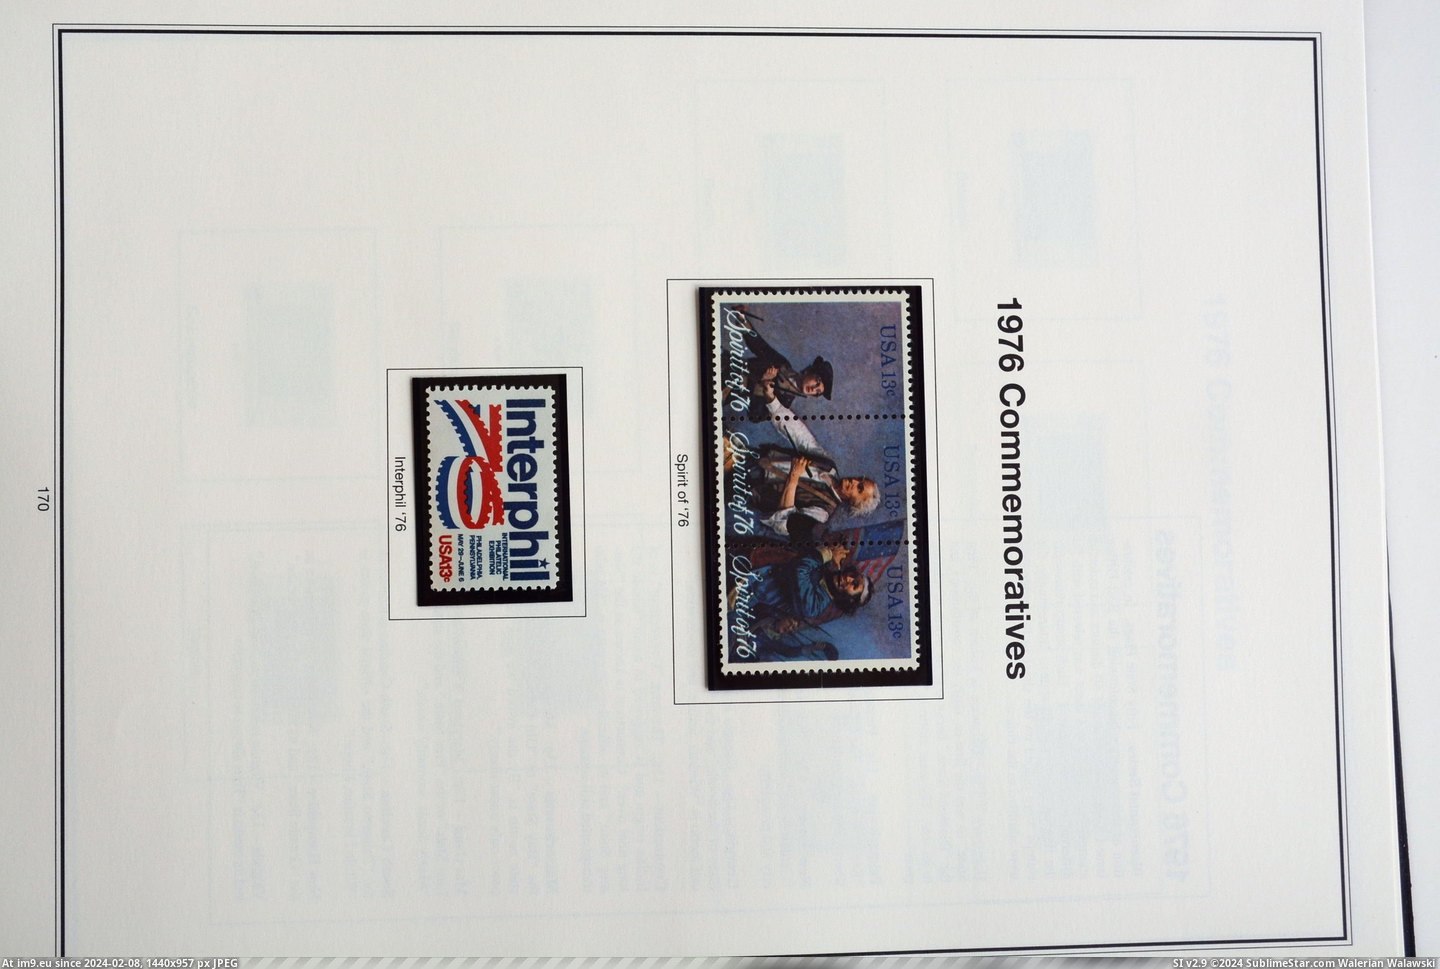  #Dsc  DSC_0880 Pic. (Image of album Stamp Covers))